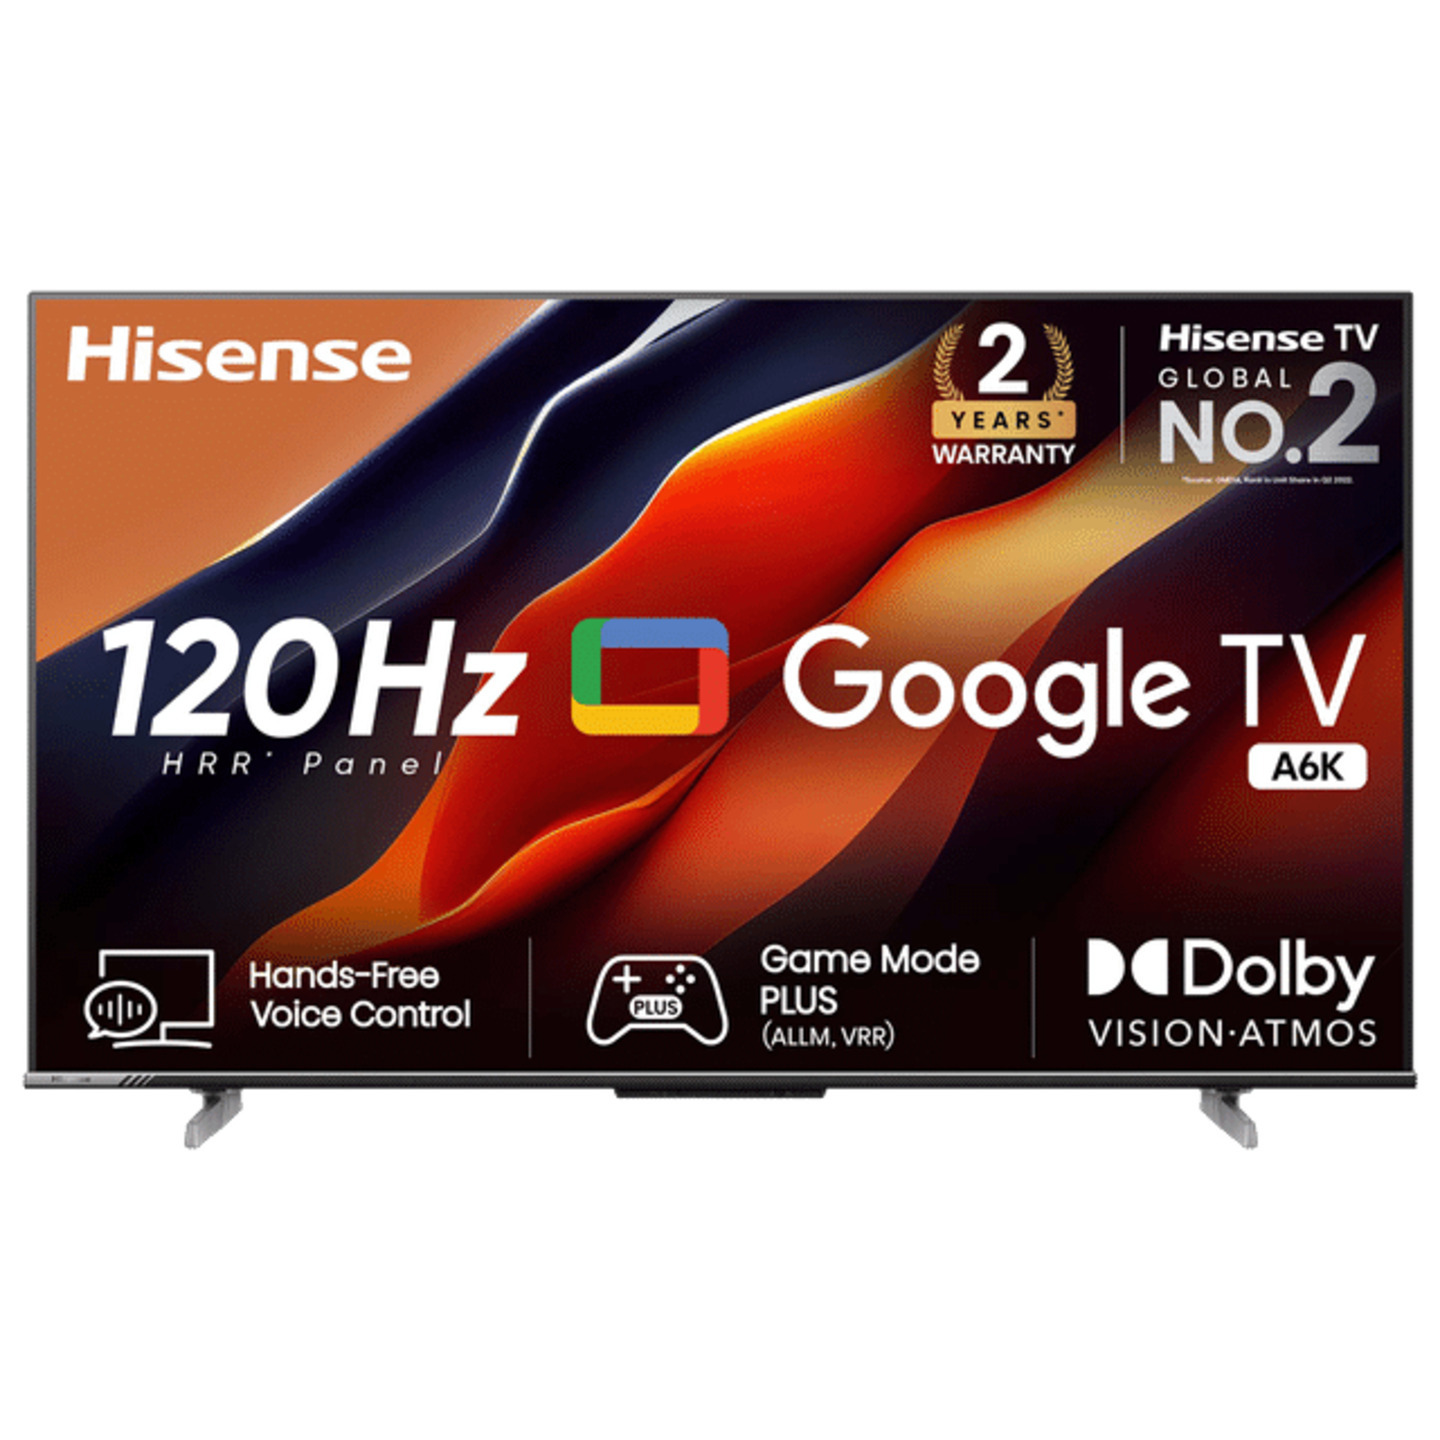 Hisense A6K 191 cm (75 inch) 4K Ultra HD LED Google TV with Dolby Atmos